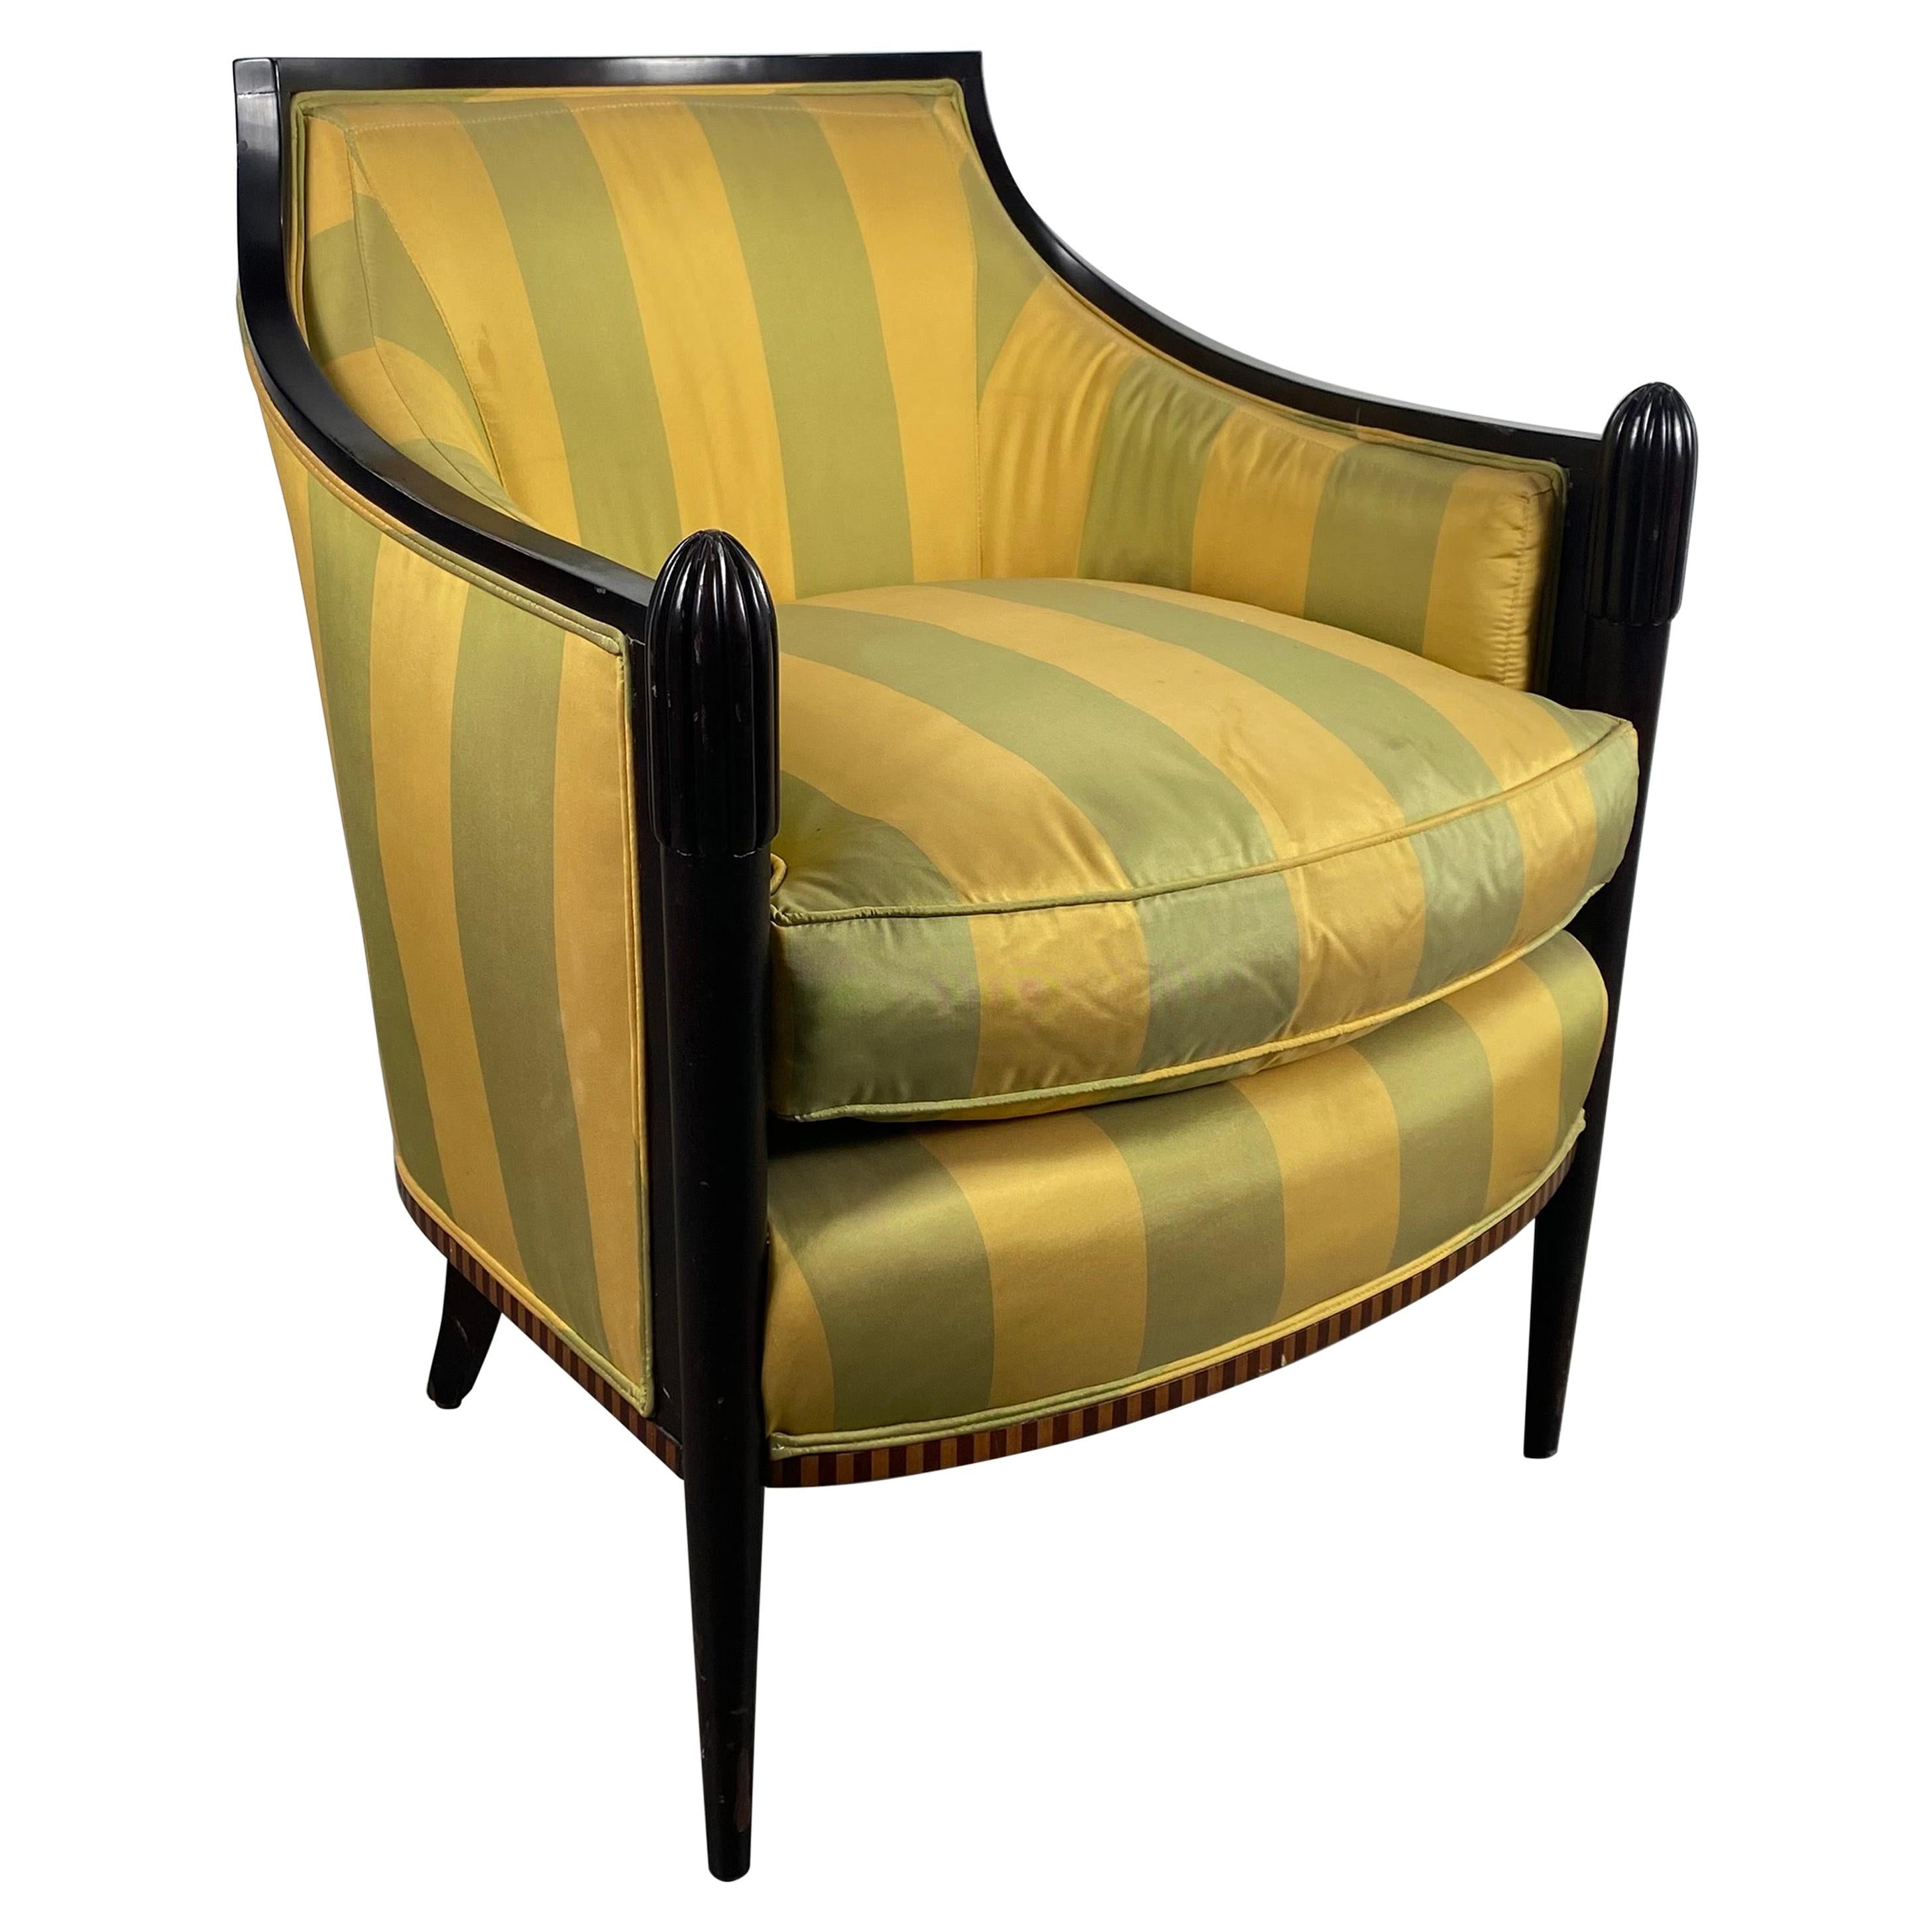 Stunning Art Deco Style Salon Chair by Baker Furniture after Paul Follot